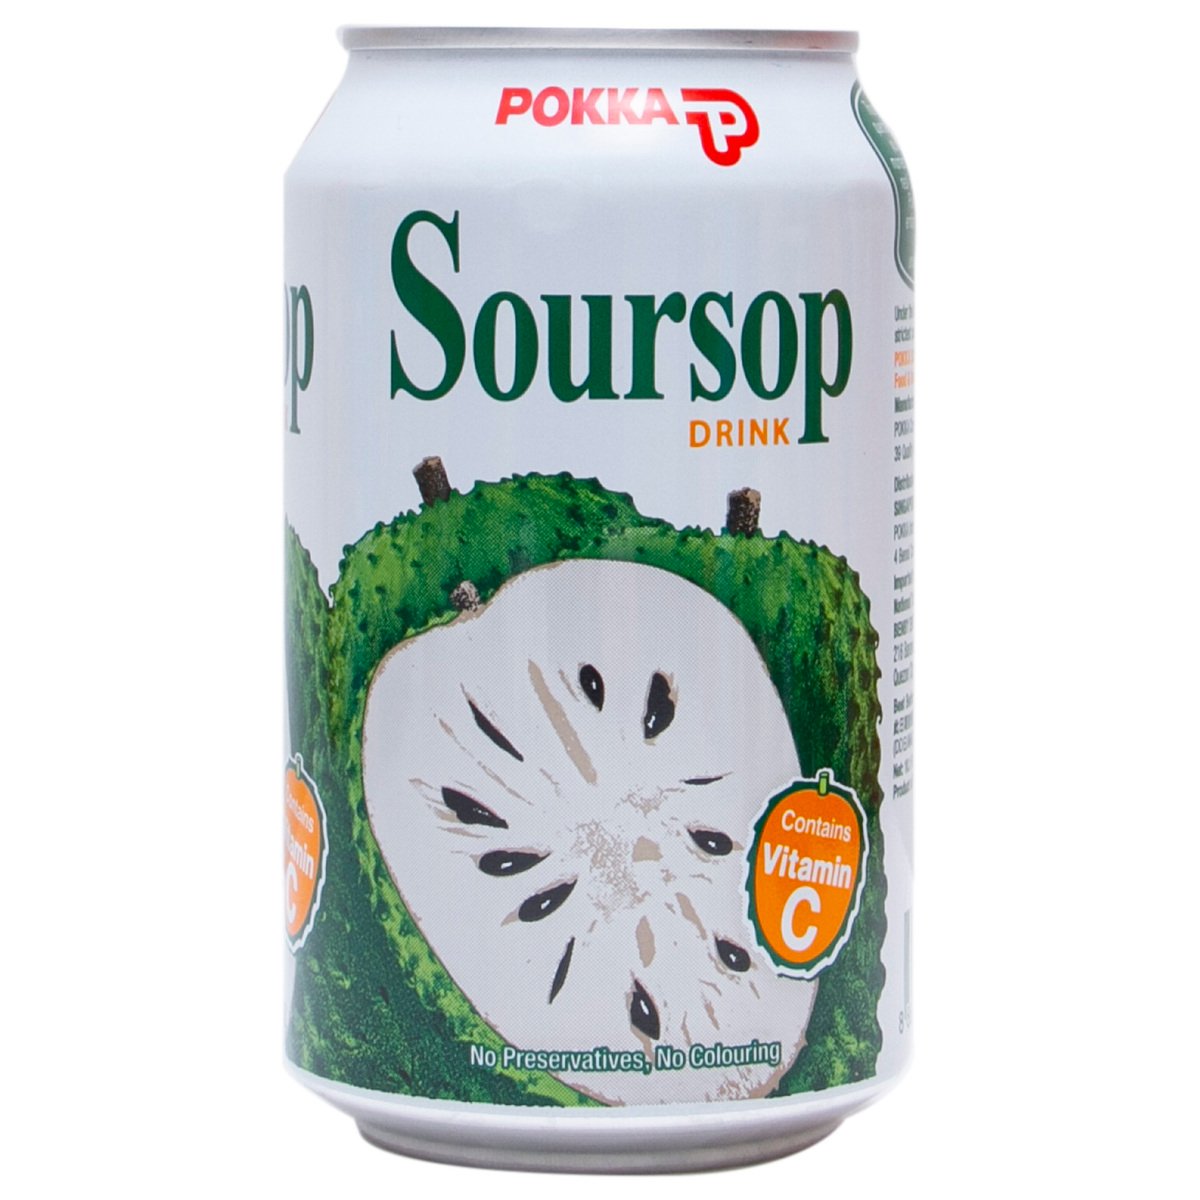 Pokka Soursop Drink 300 ml